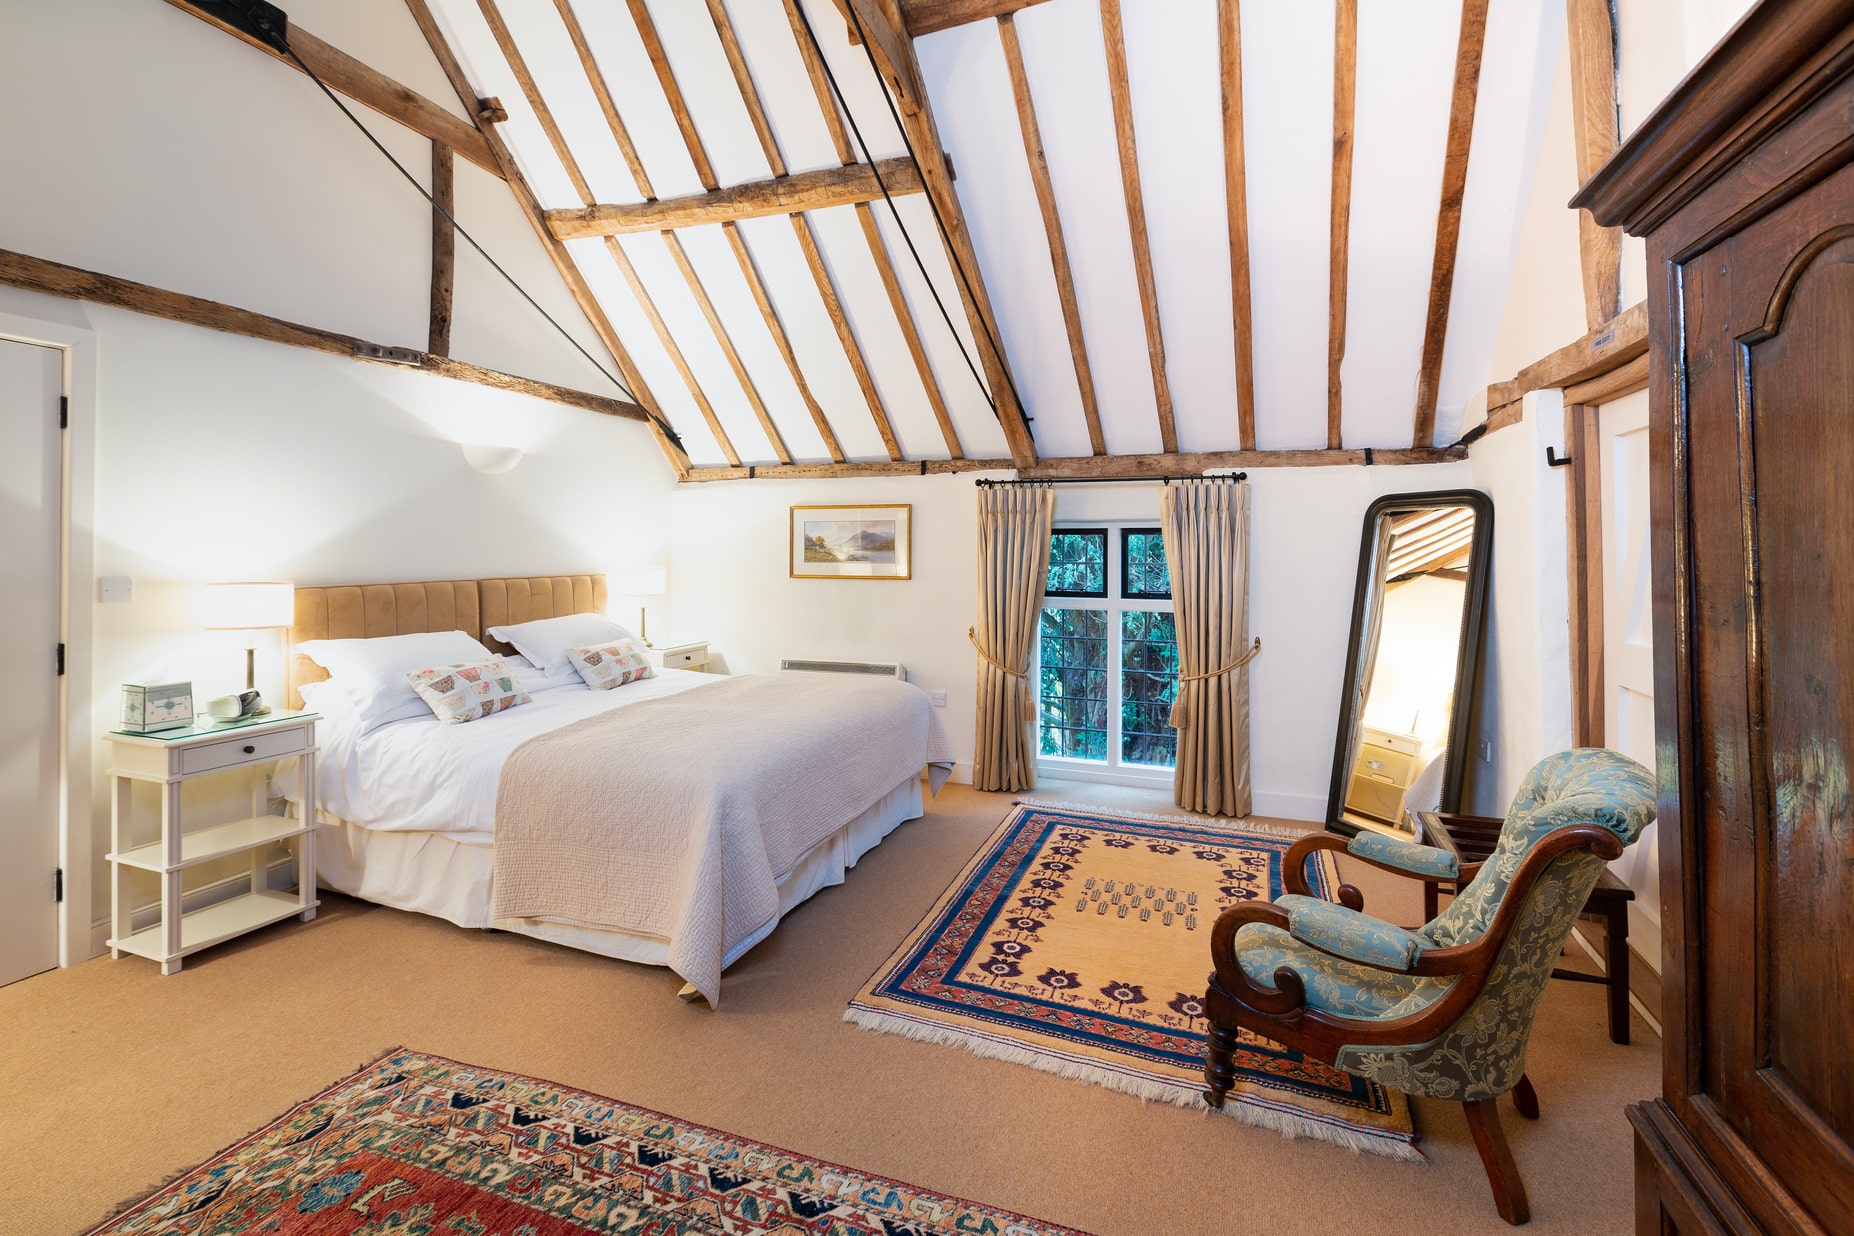 Bedroom with oak beams